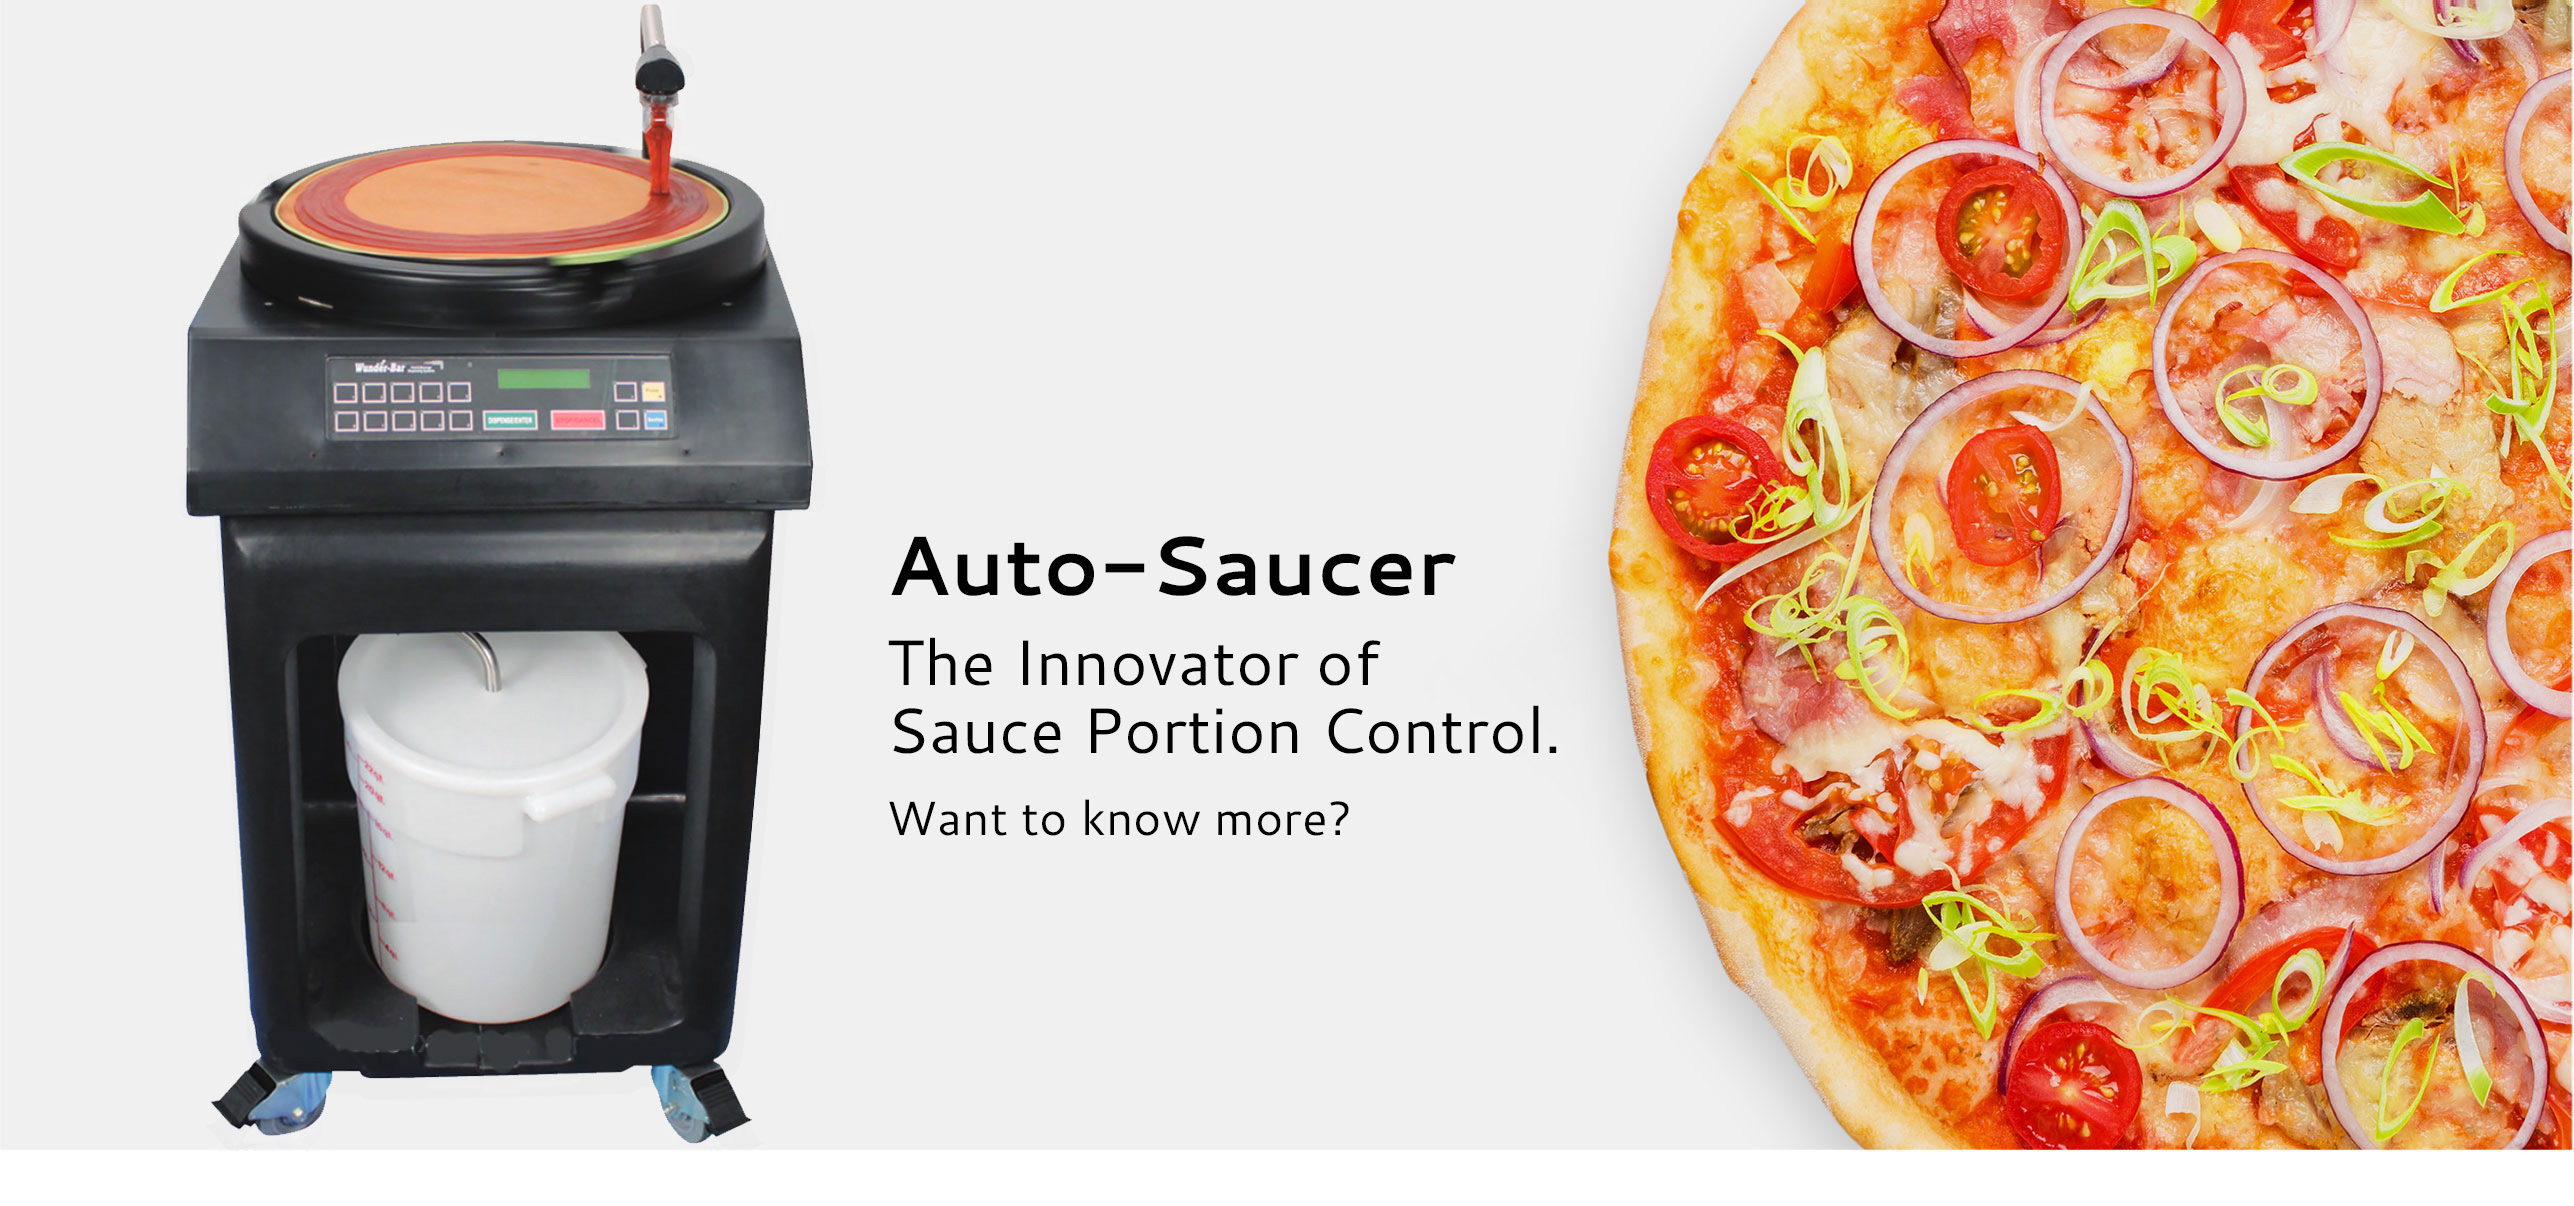 Auto-Saucer
The Innovator of Sauce Portion Control